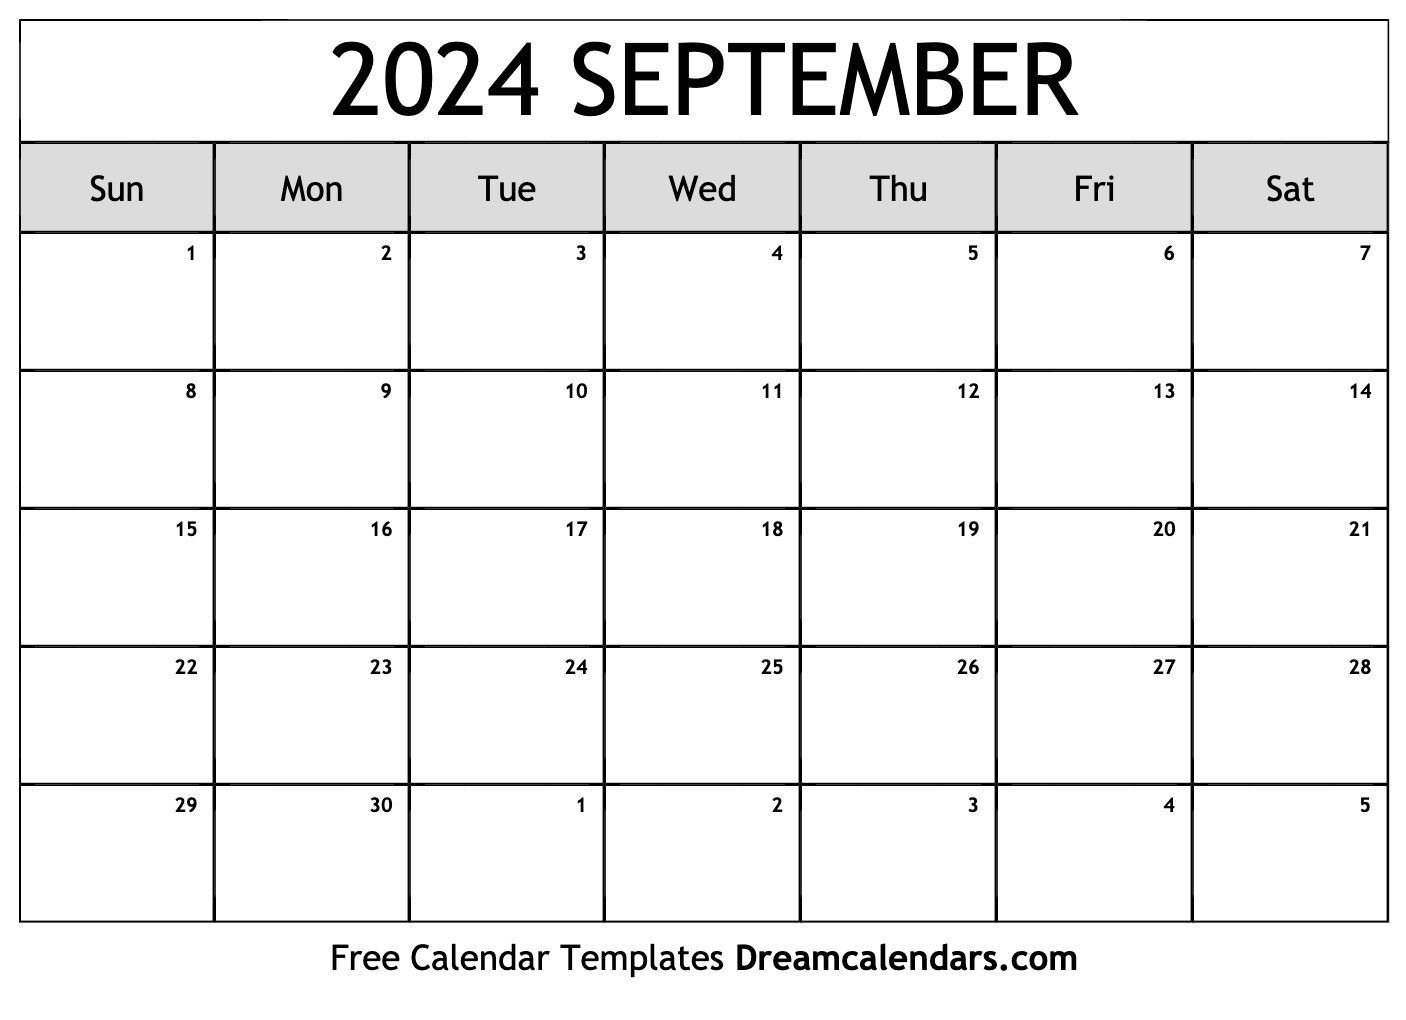 September 2024 Calendar | Free Blank Printable With Holidays | Printable Calendar 2024 September